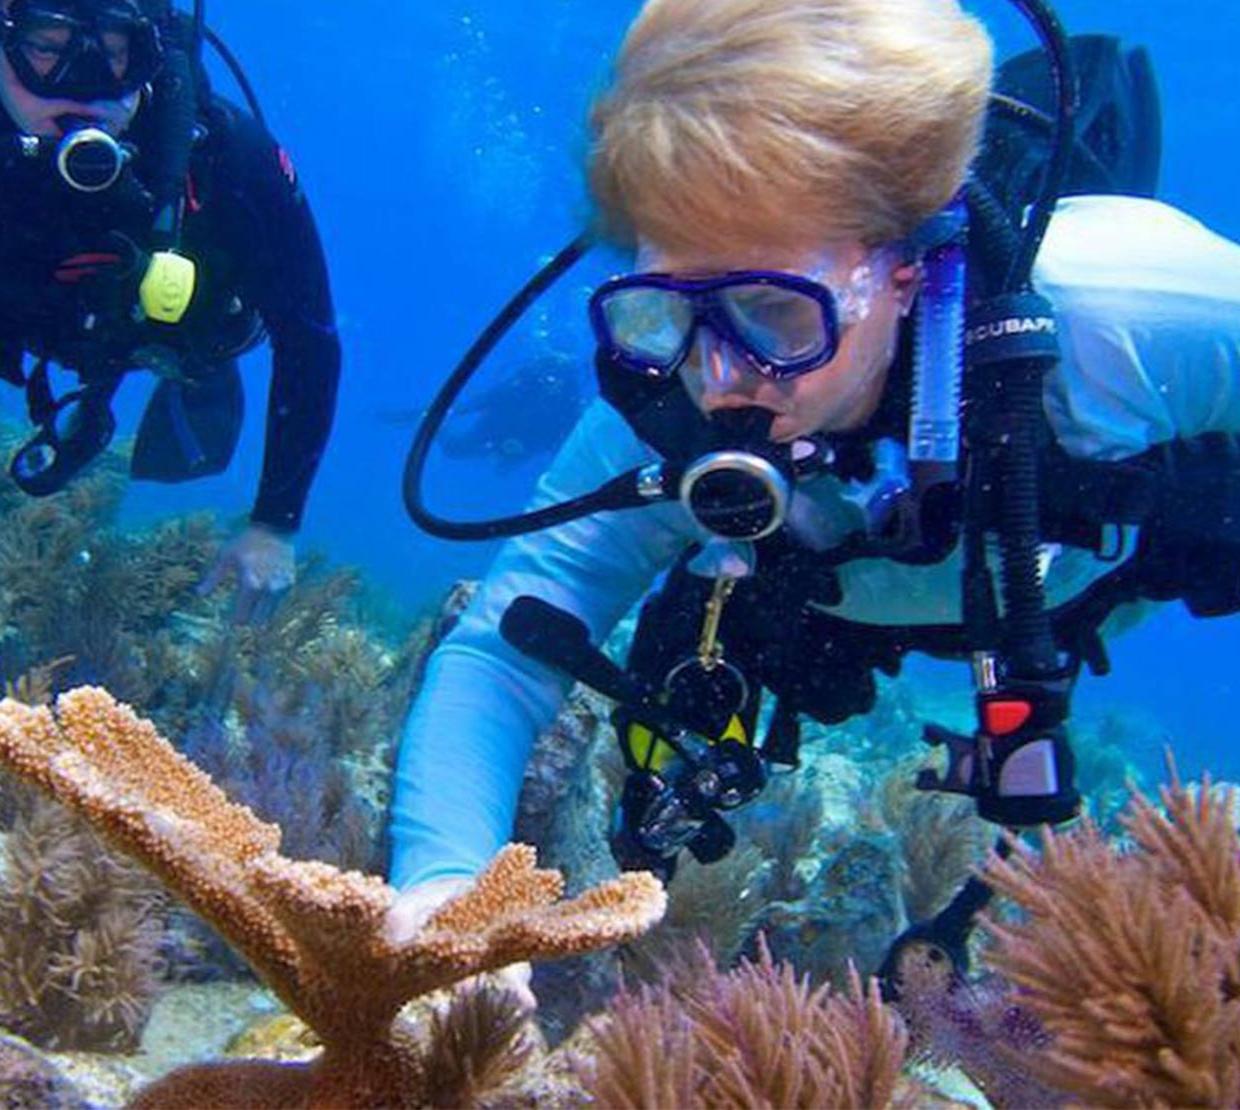 Oregon State marine ecologist Jane Lubchenco examines corals in the ocean